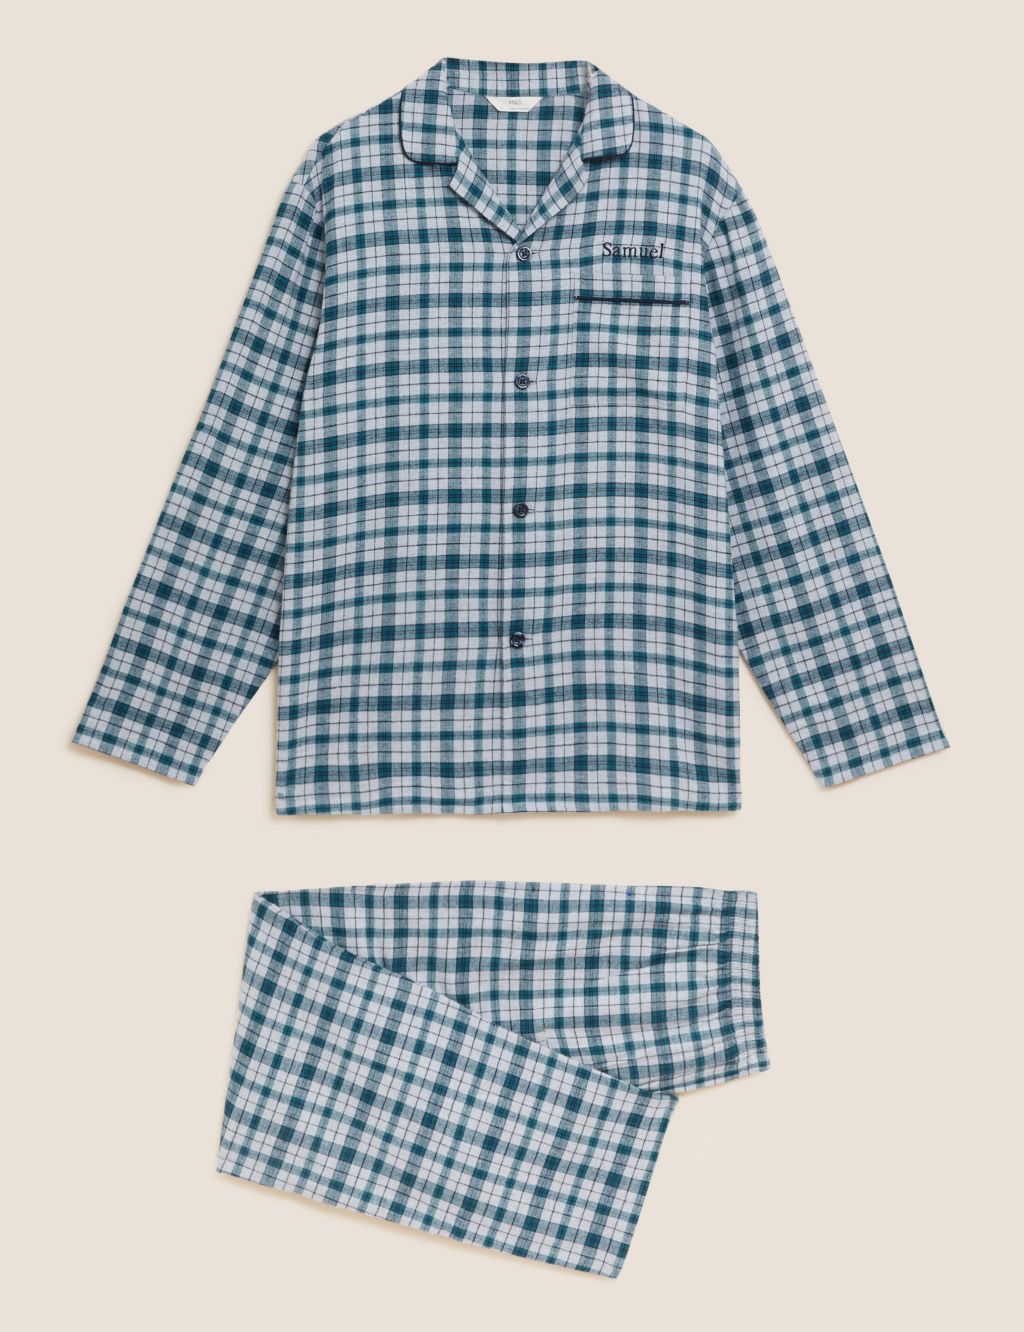 Personalised Men's Check Pyjama Set image 1